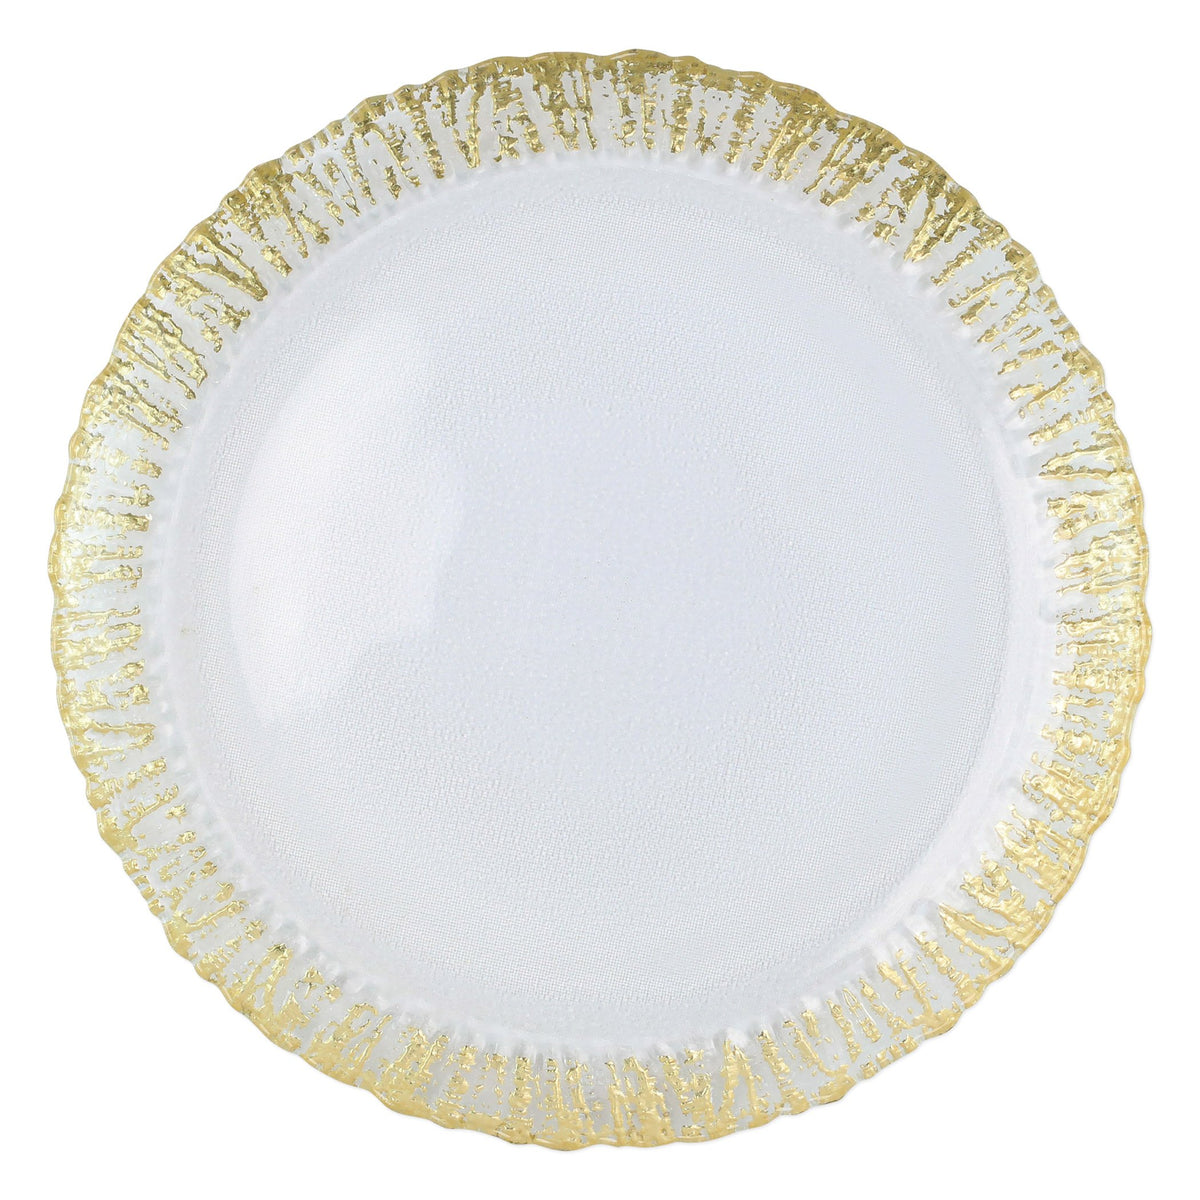 VIETRI: Rufolo Glass Gold Round Platter - Artistica.com